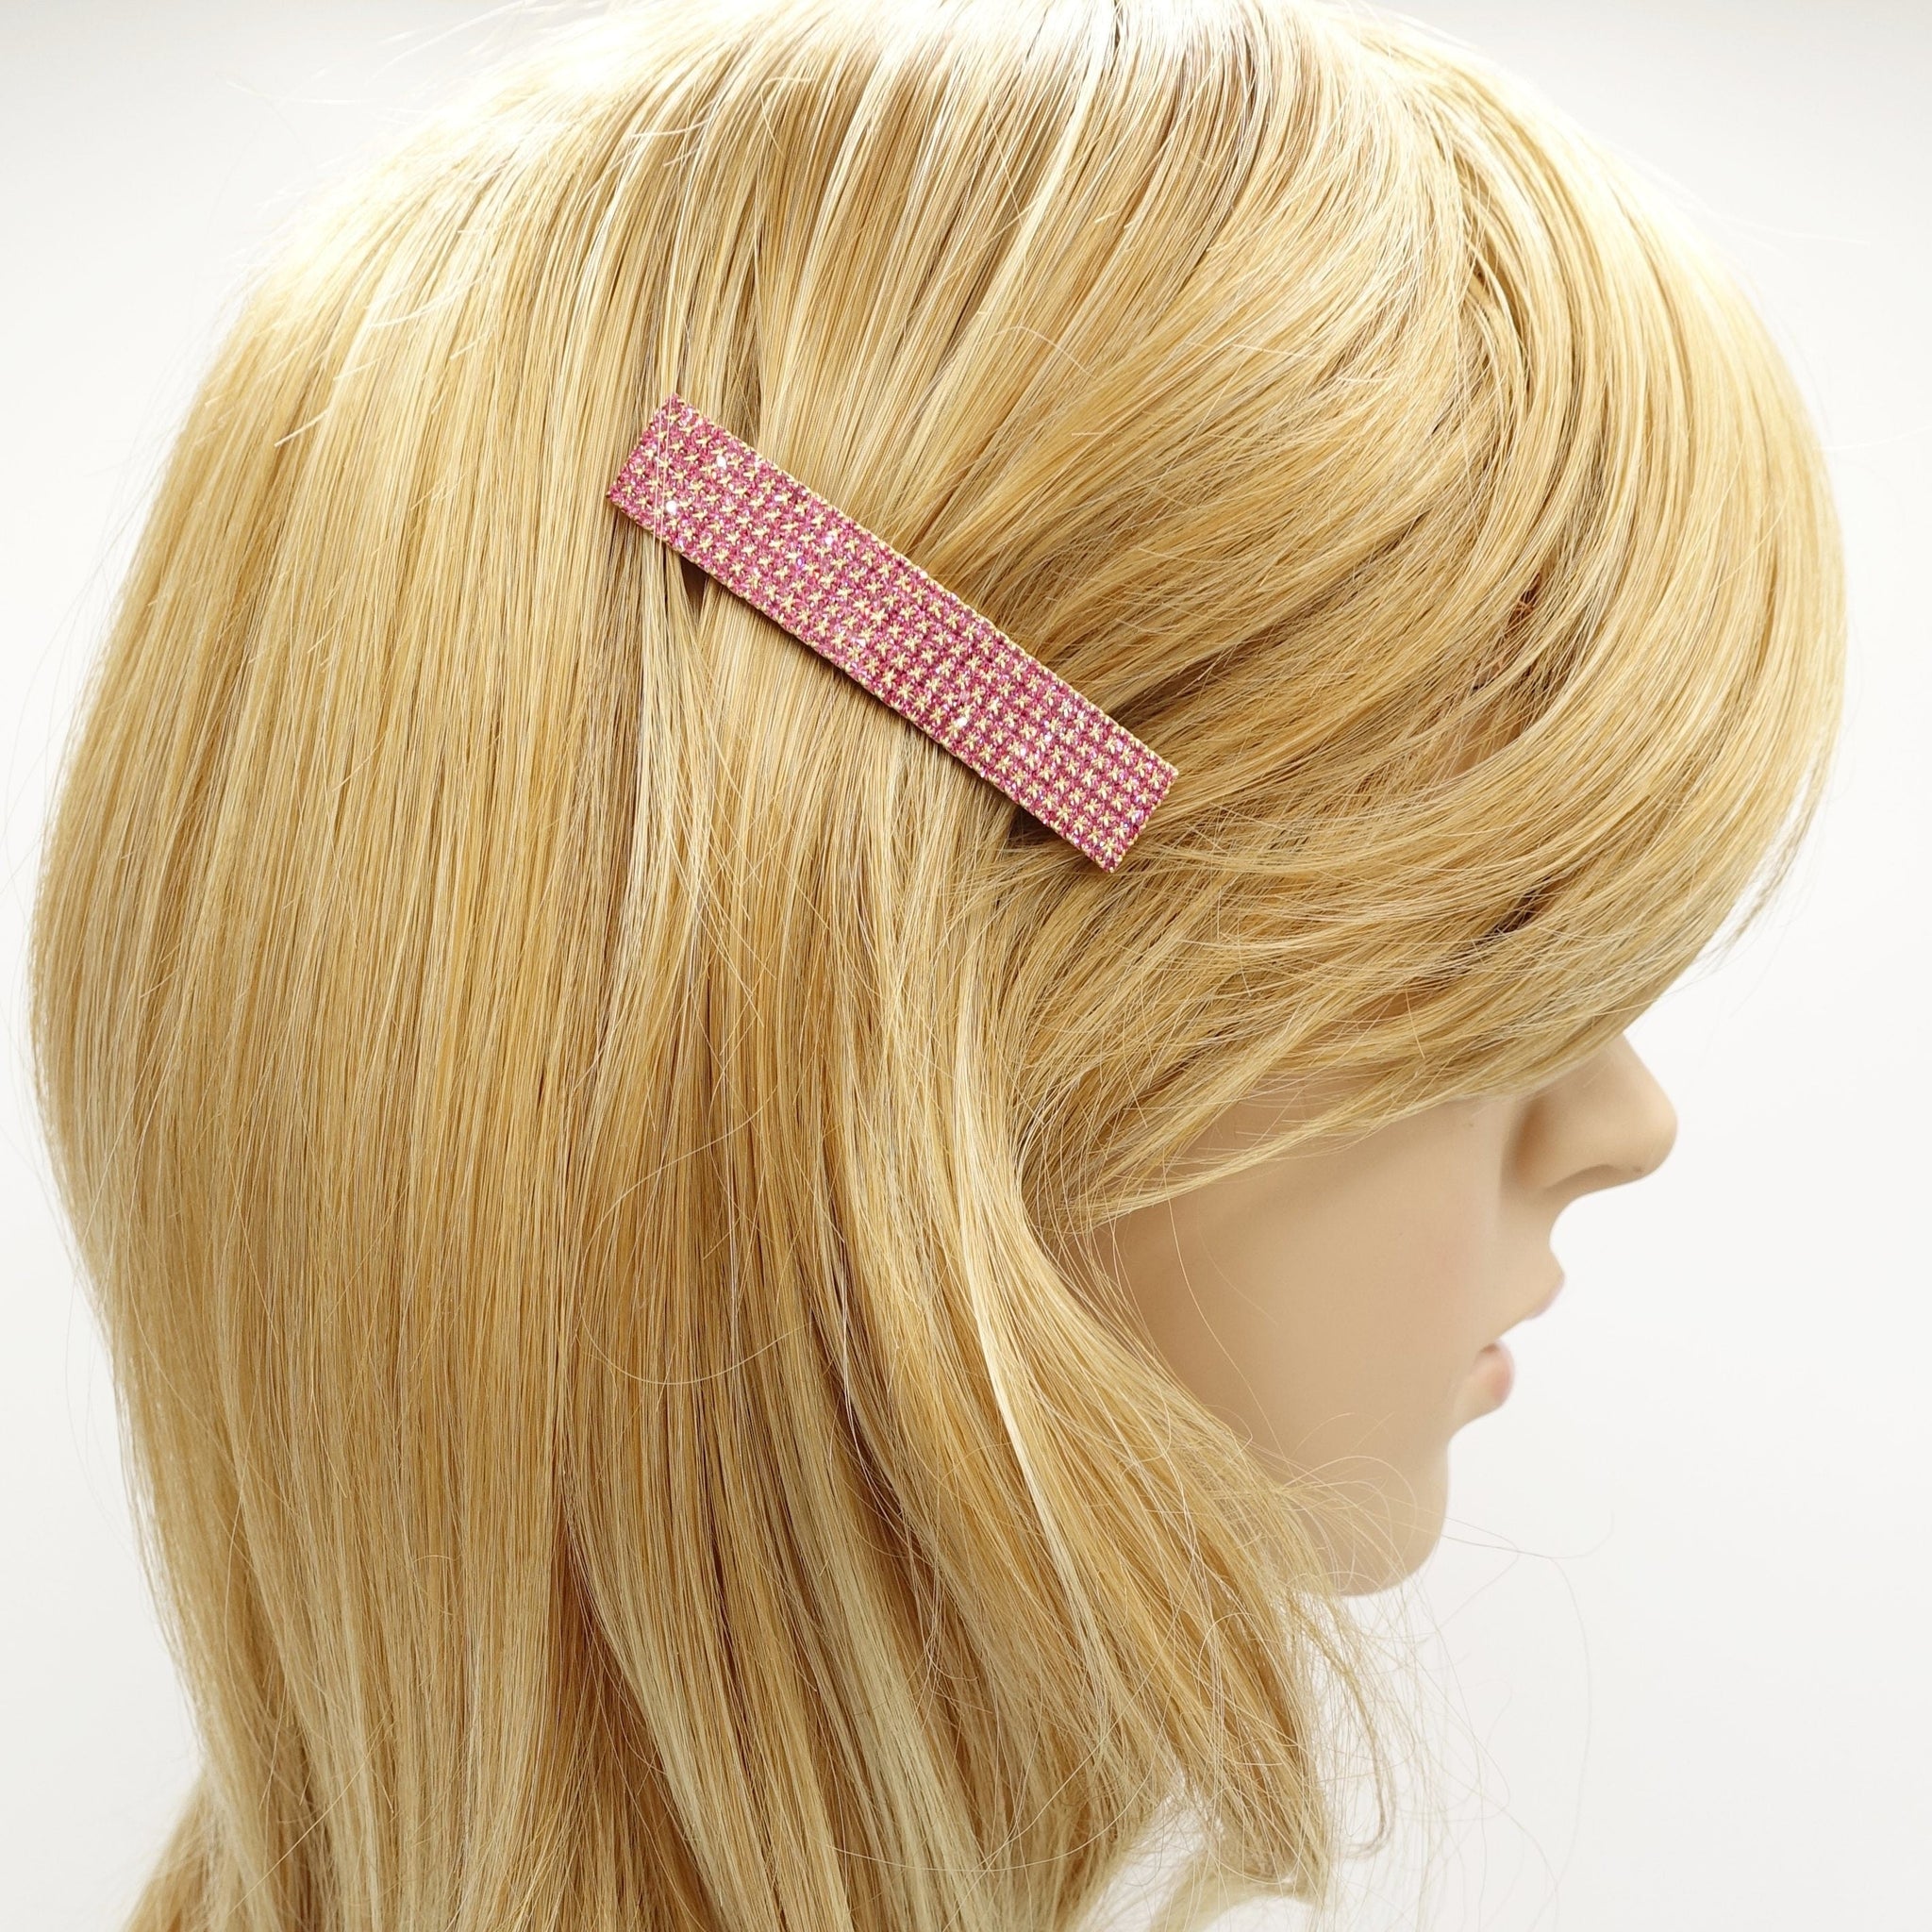 veryshine.com Barrette (Bow) Pink rhinestone embellished rectangle mini hair barrette woman hair accessories